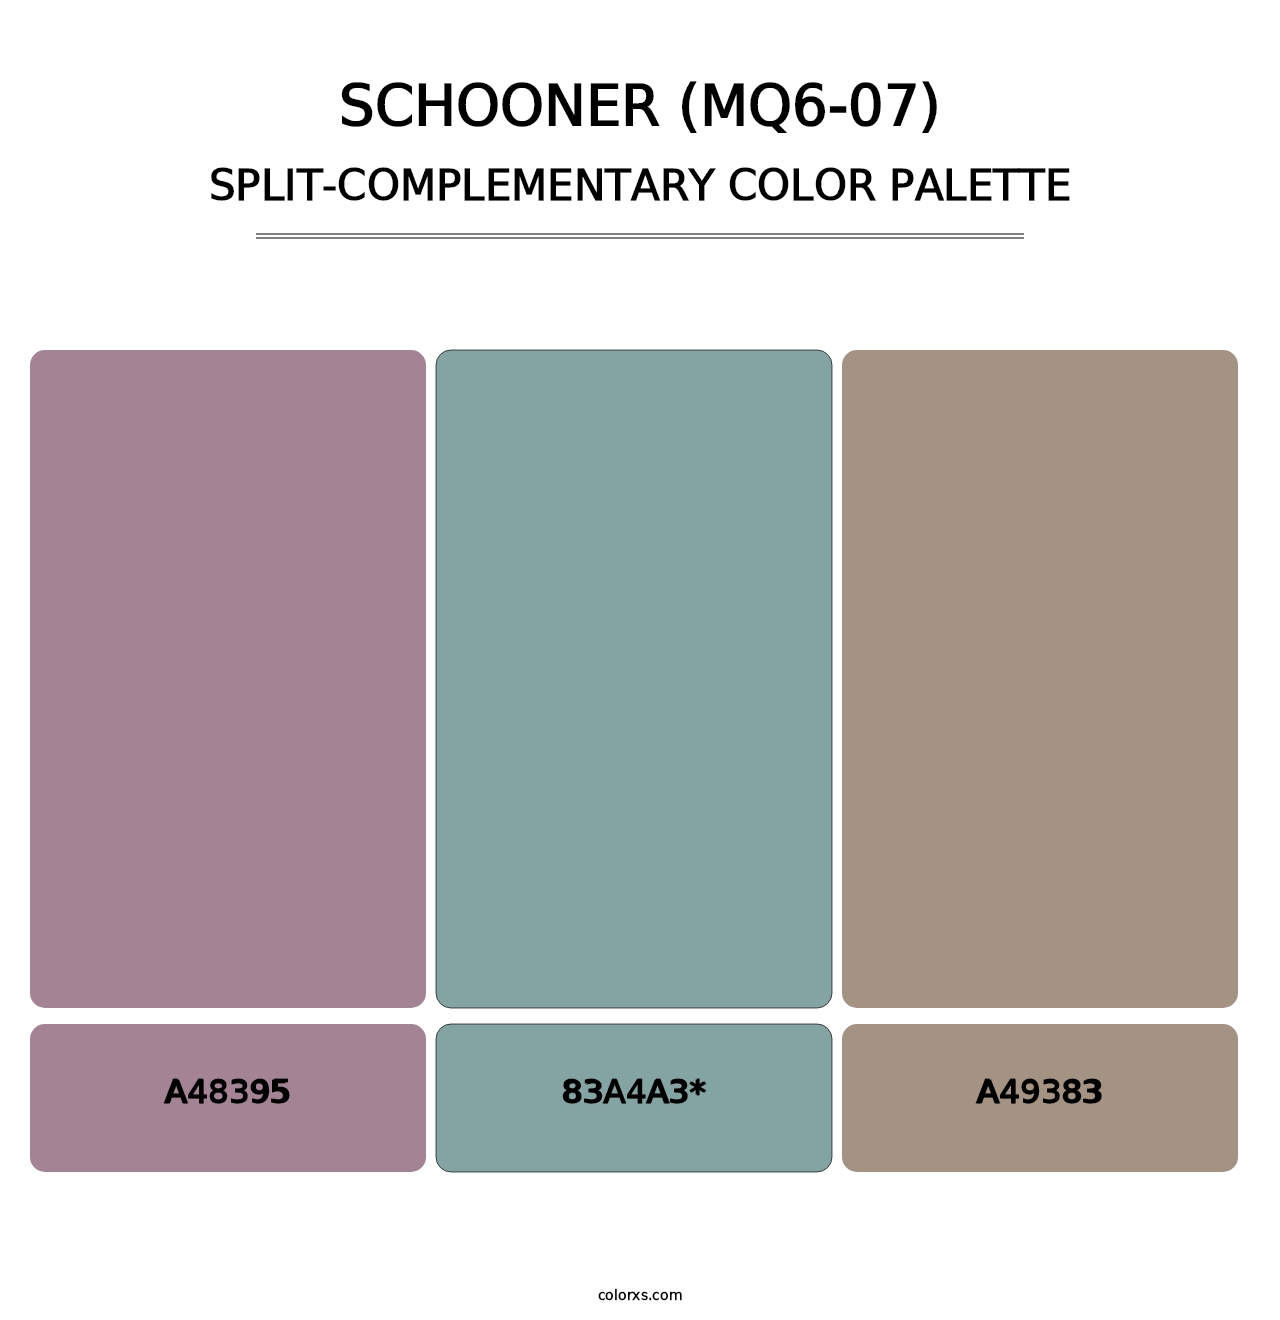 Schooner (MQ6-07) - Split-Complementary Color Palette